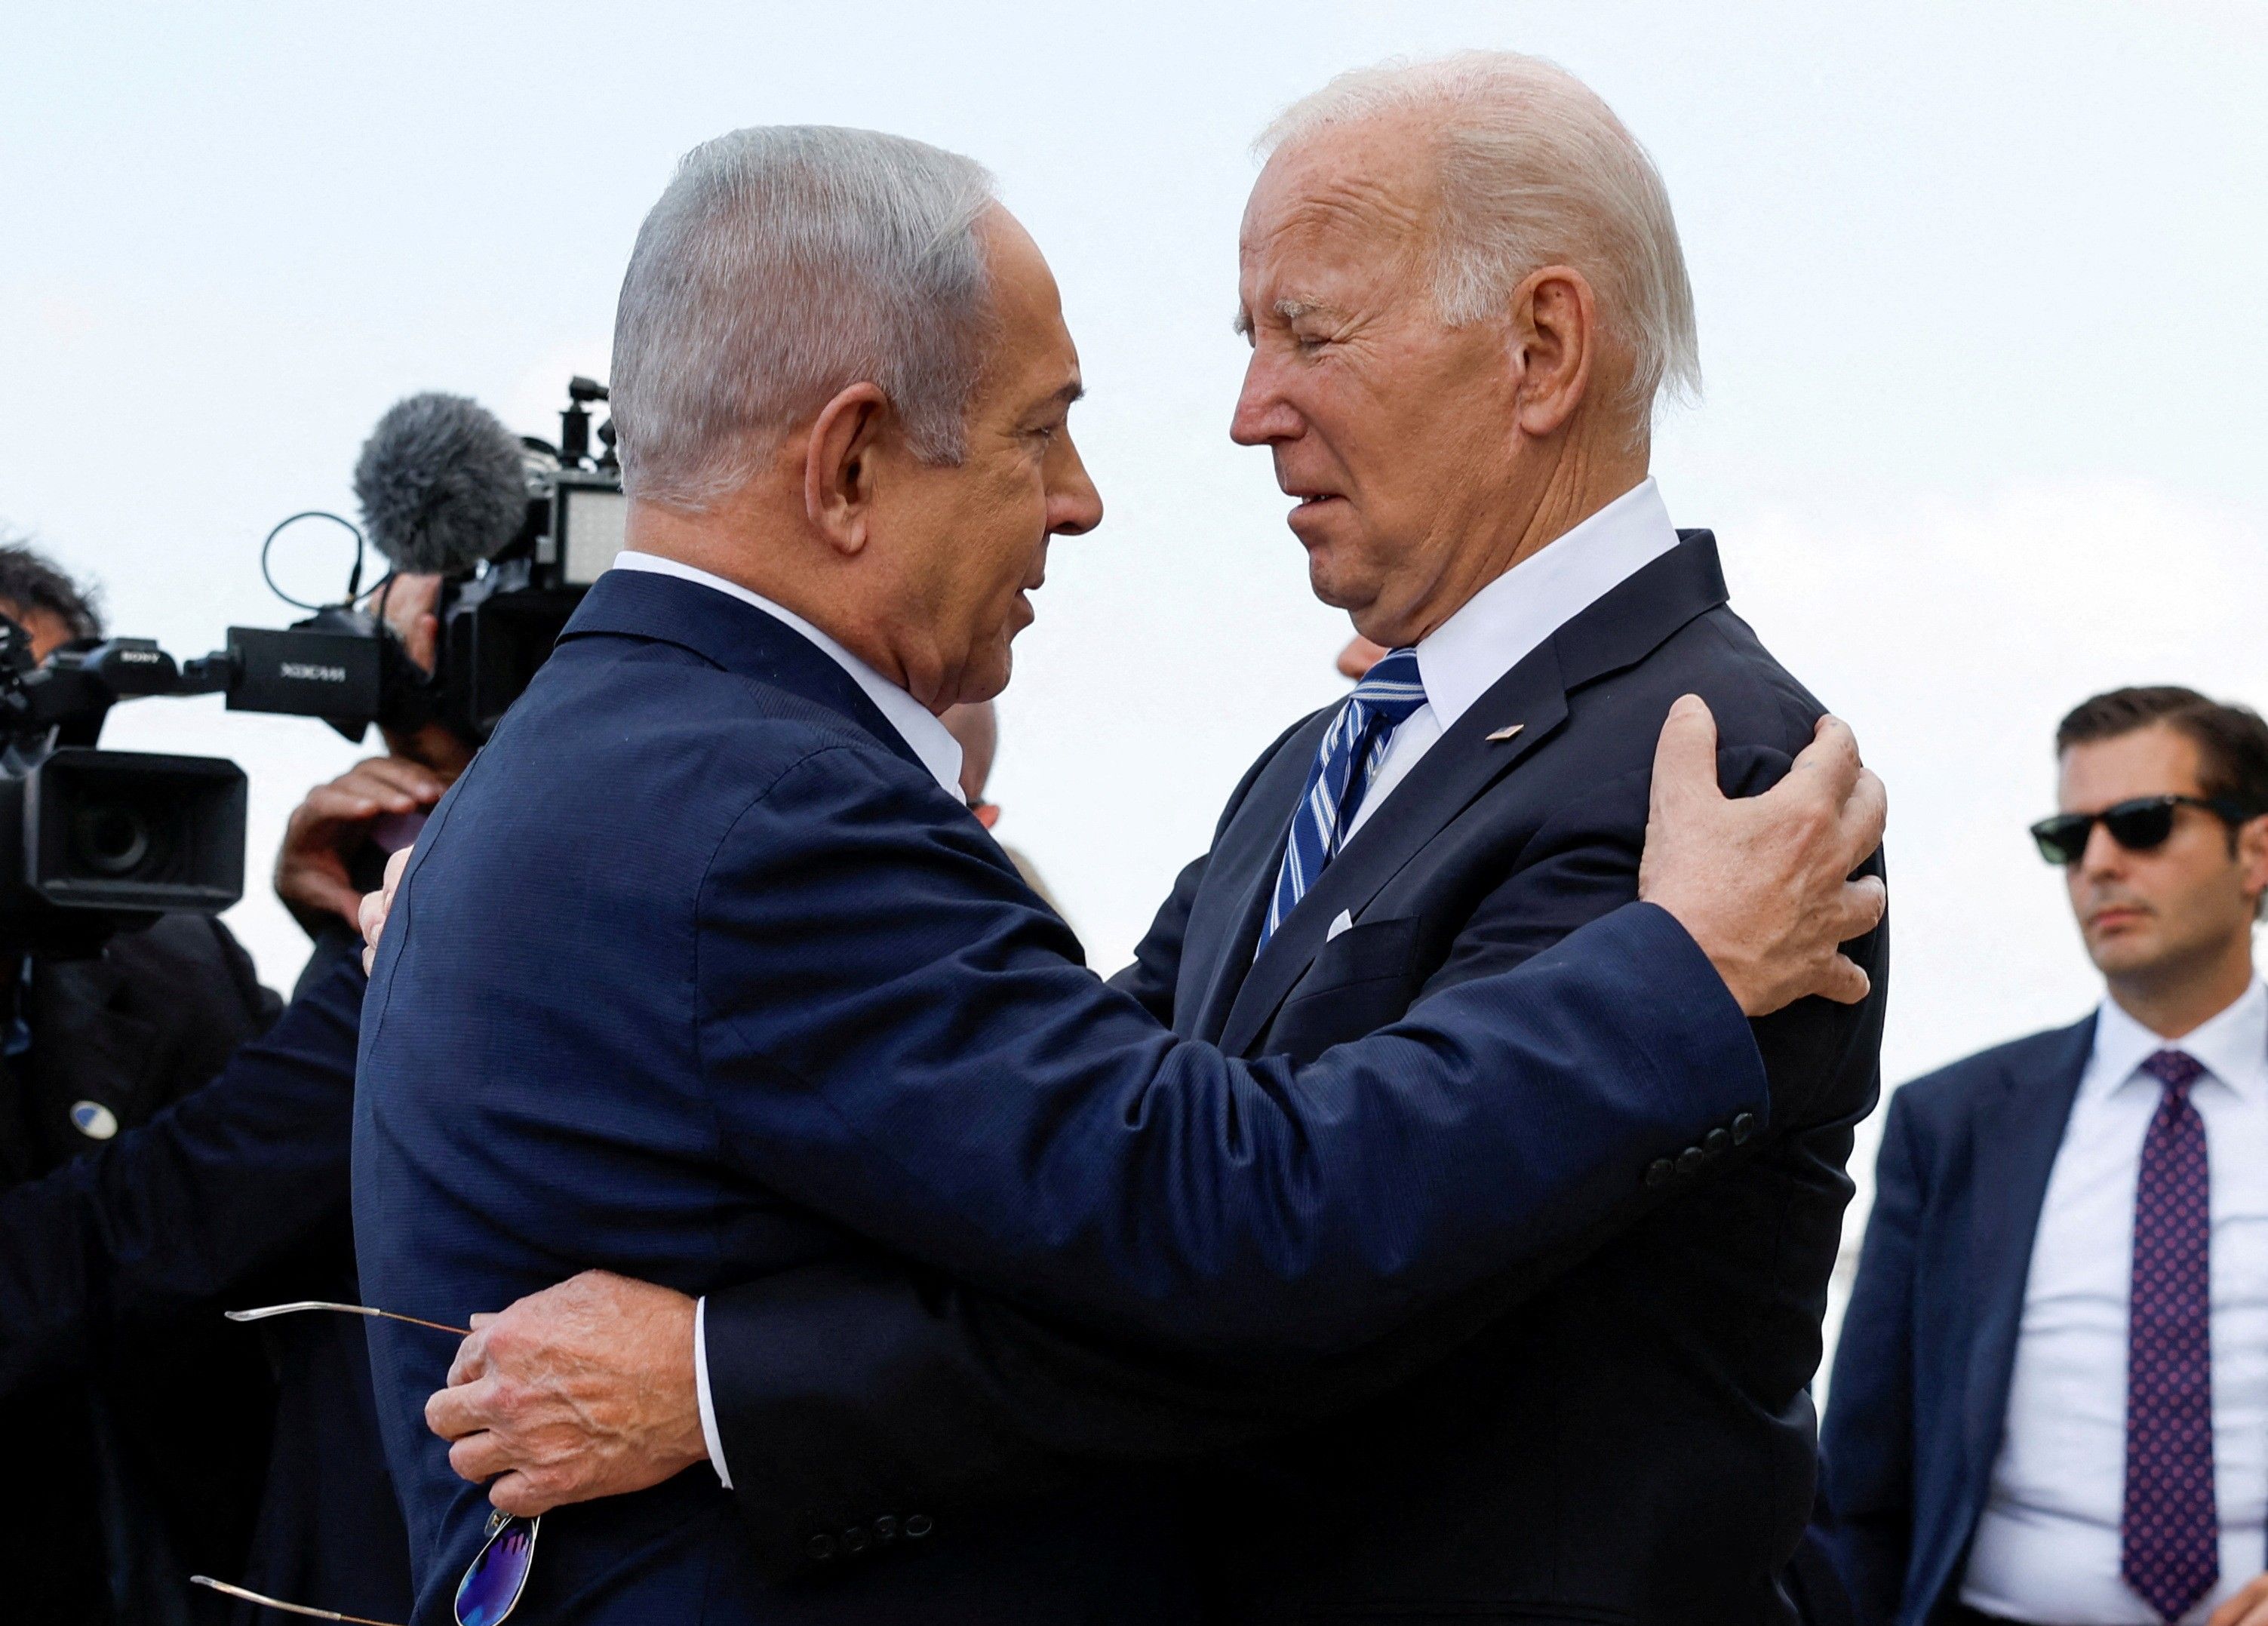 Biden needs to stop coddling Bibi